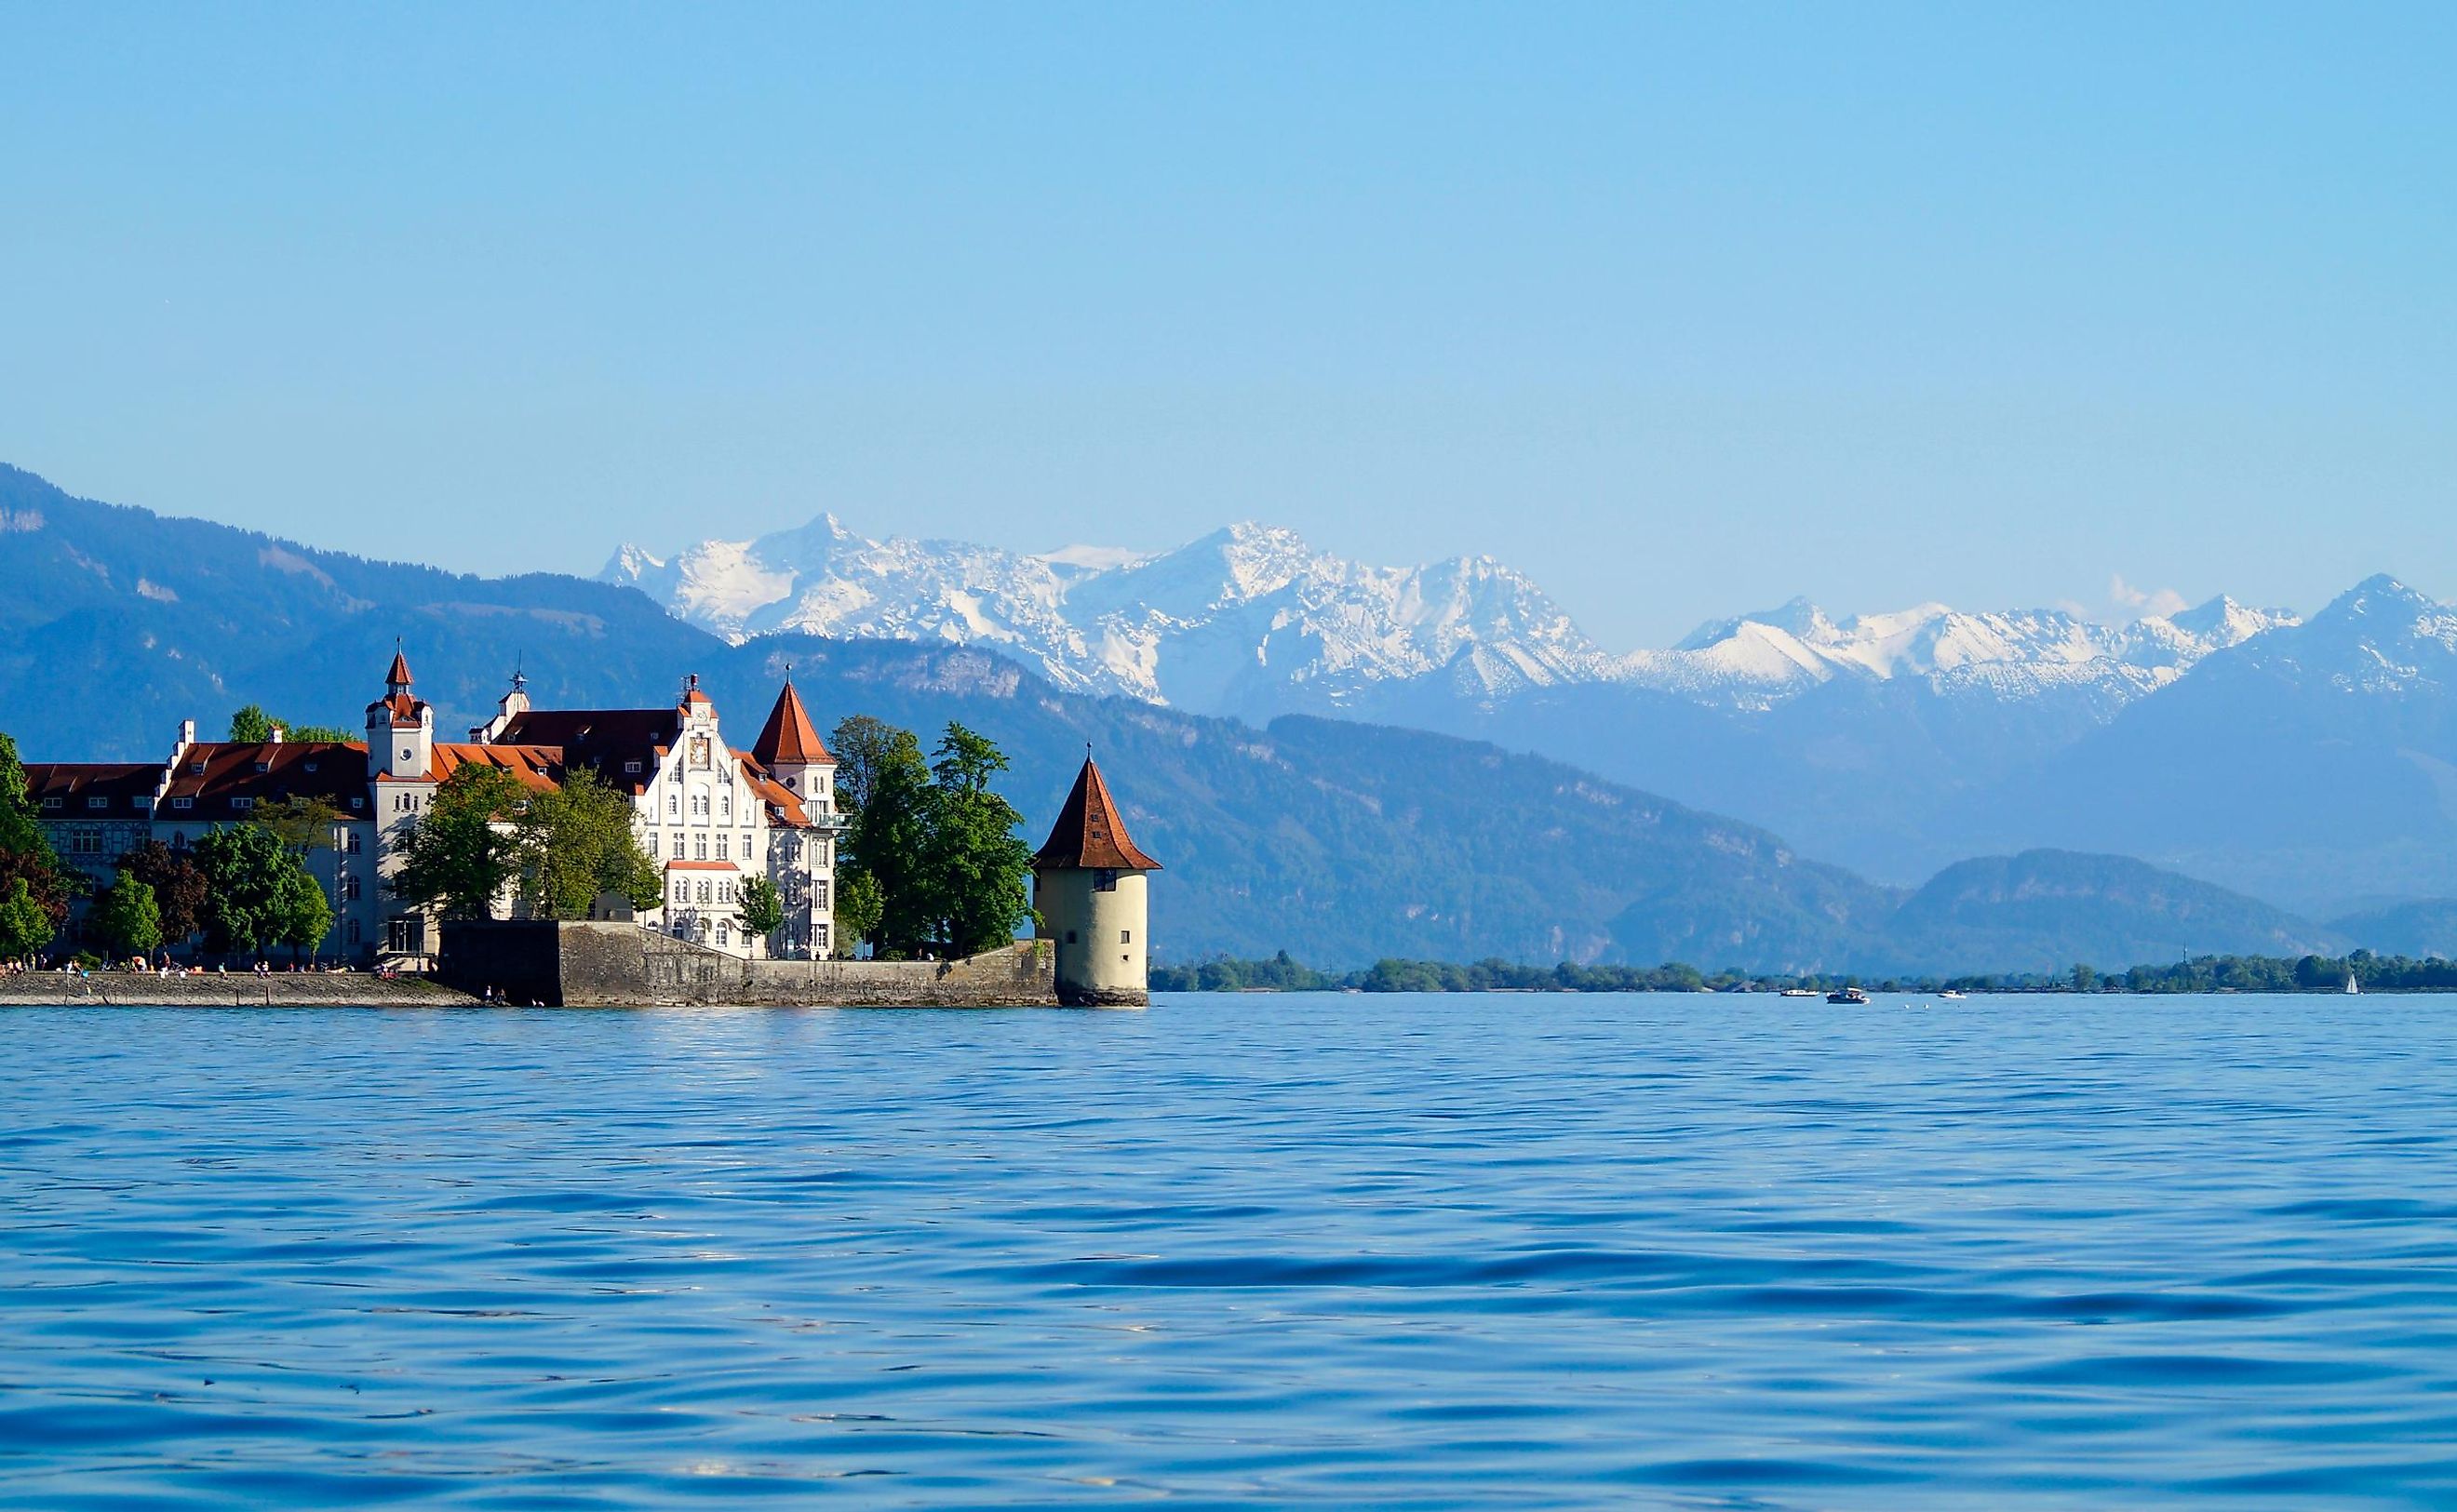 Beautiful island of Lindau on Lake Constance.